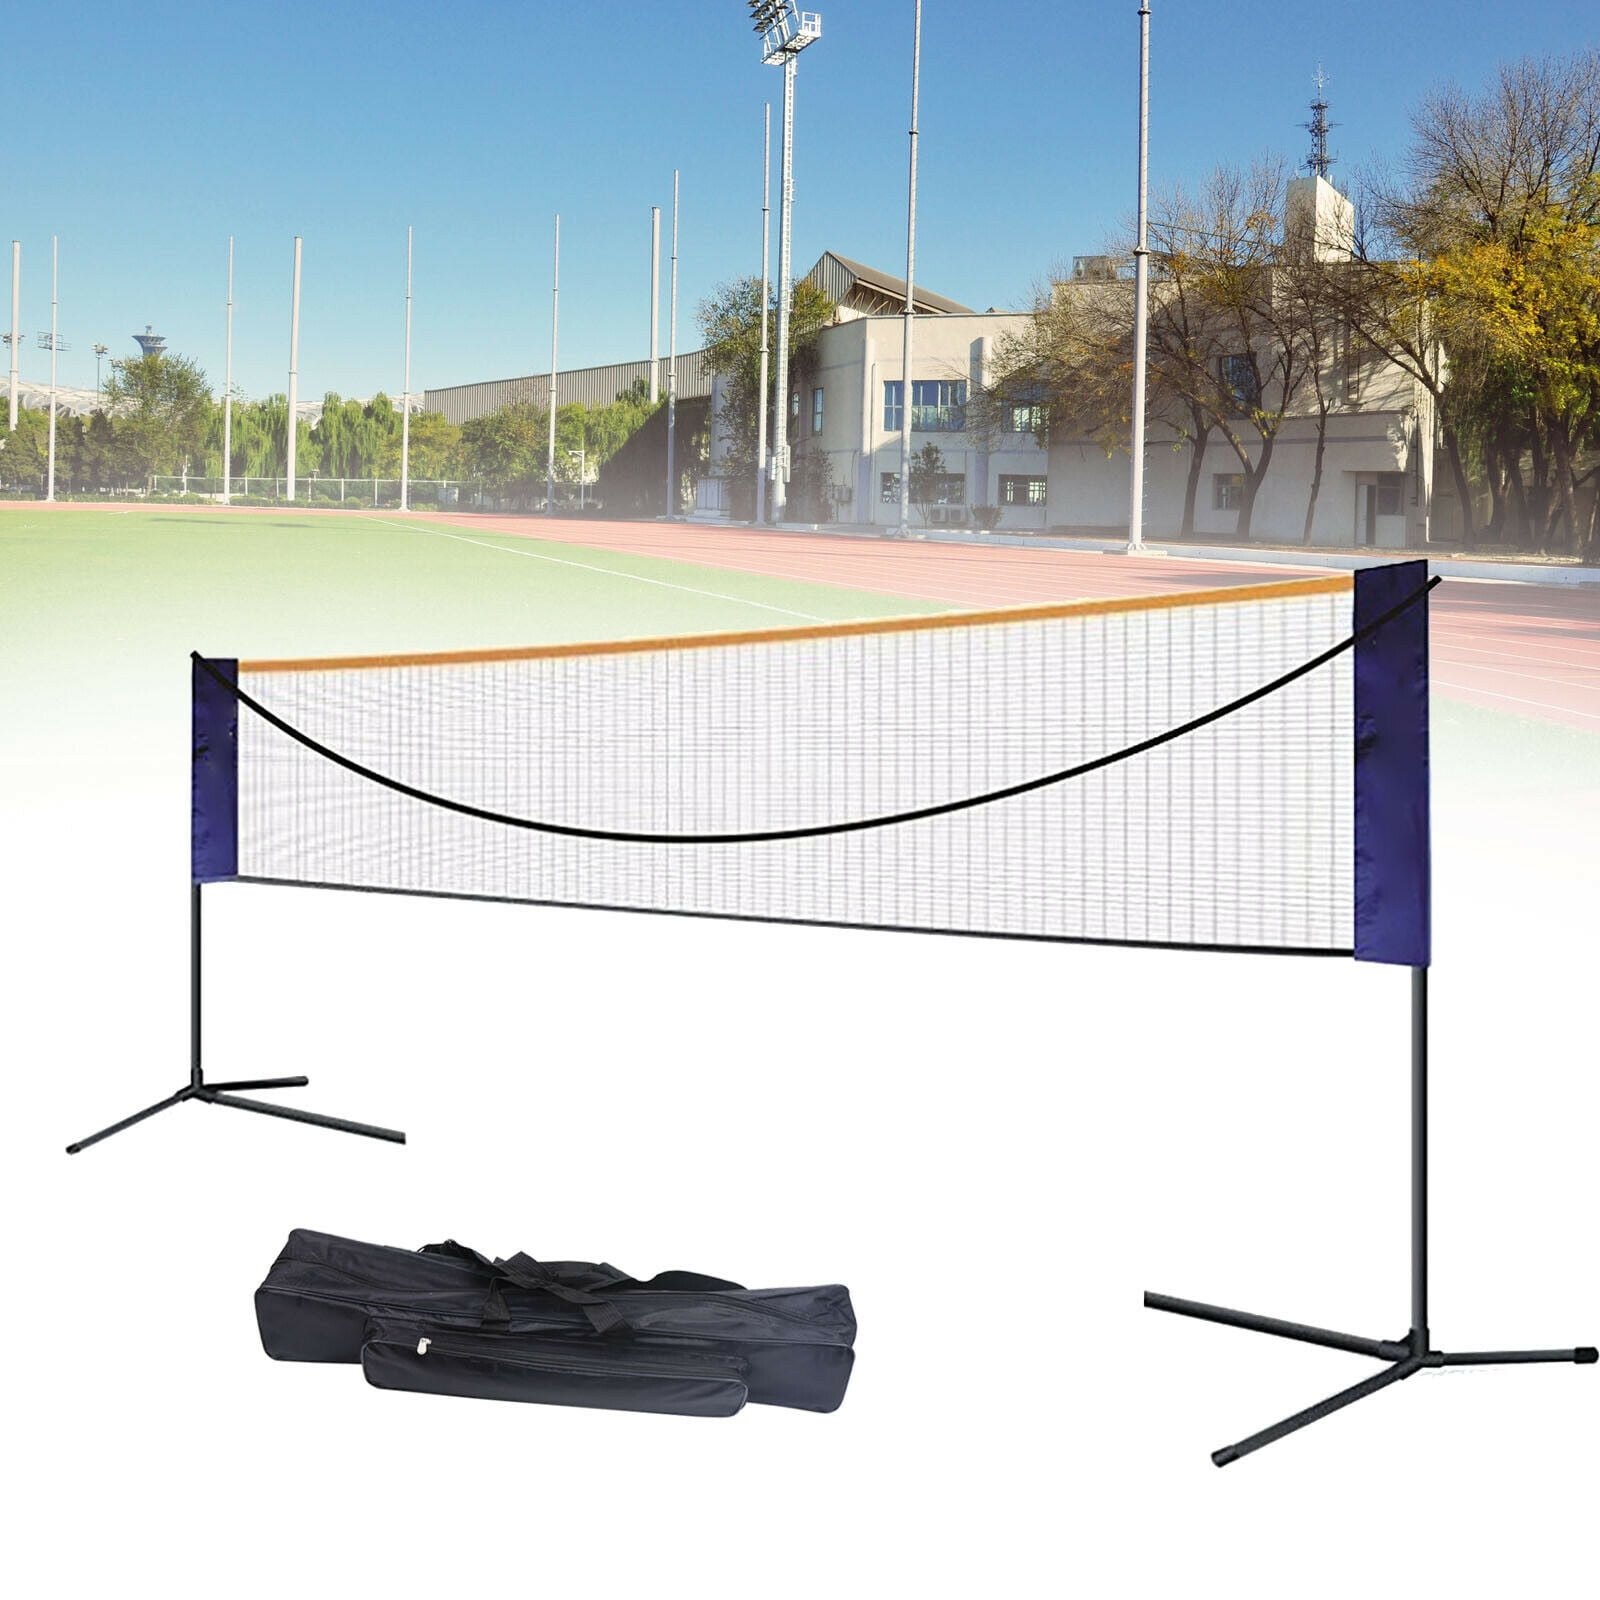 20FT Portable Standard Badminton Net Set Double Court Volleyball Tennis Sports 